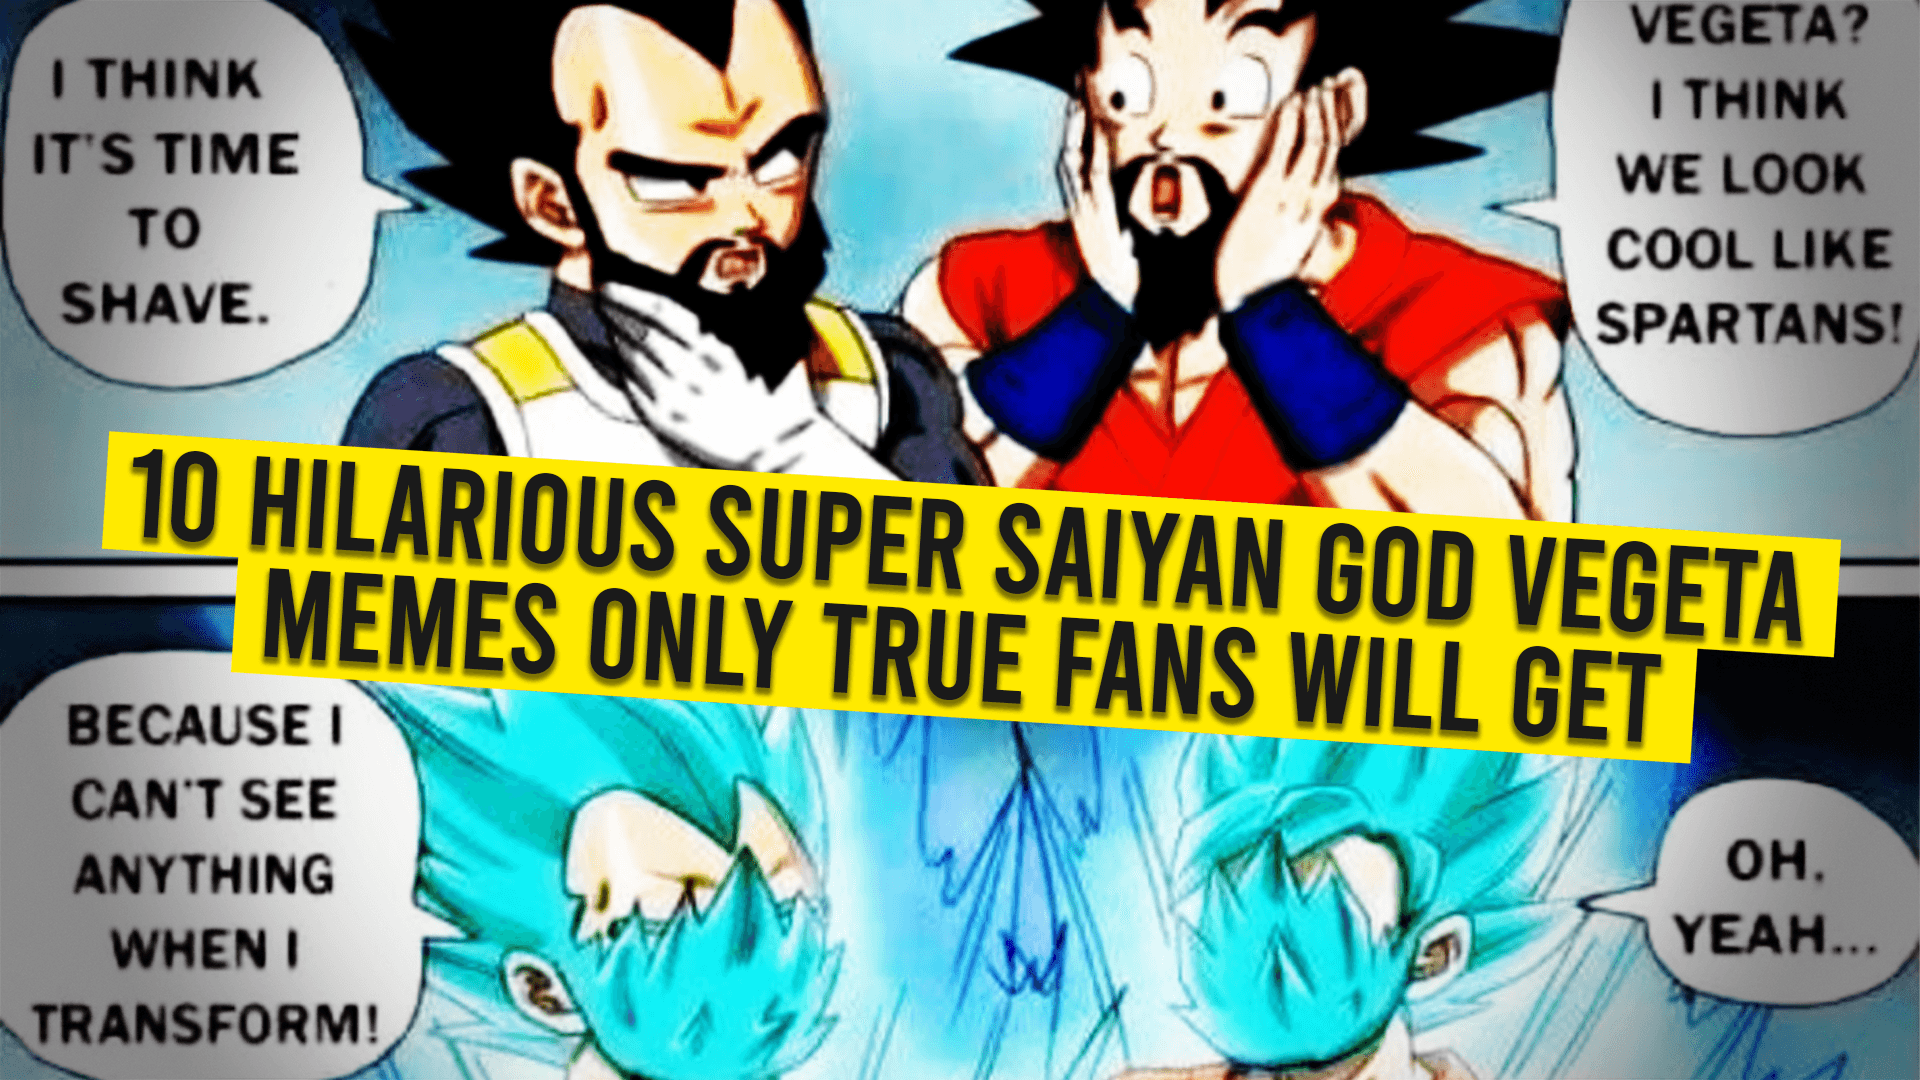 10 Hilarious Super Saiyan God Vegeta Memes Only True Fans Will Get.